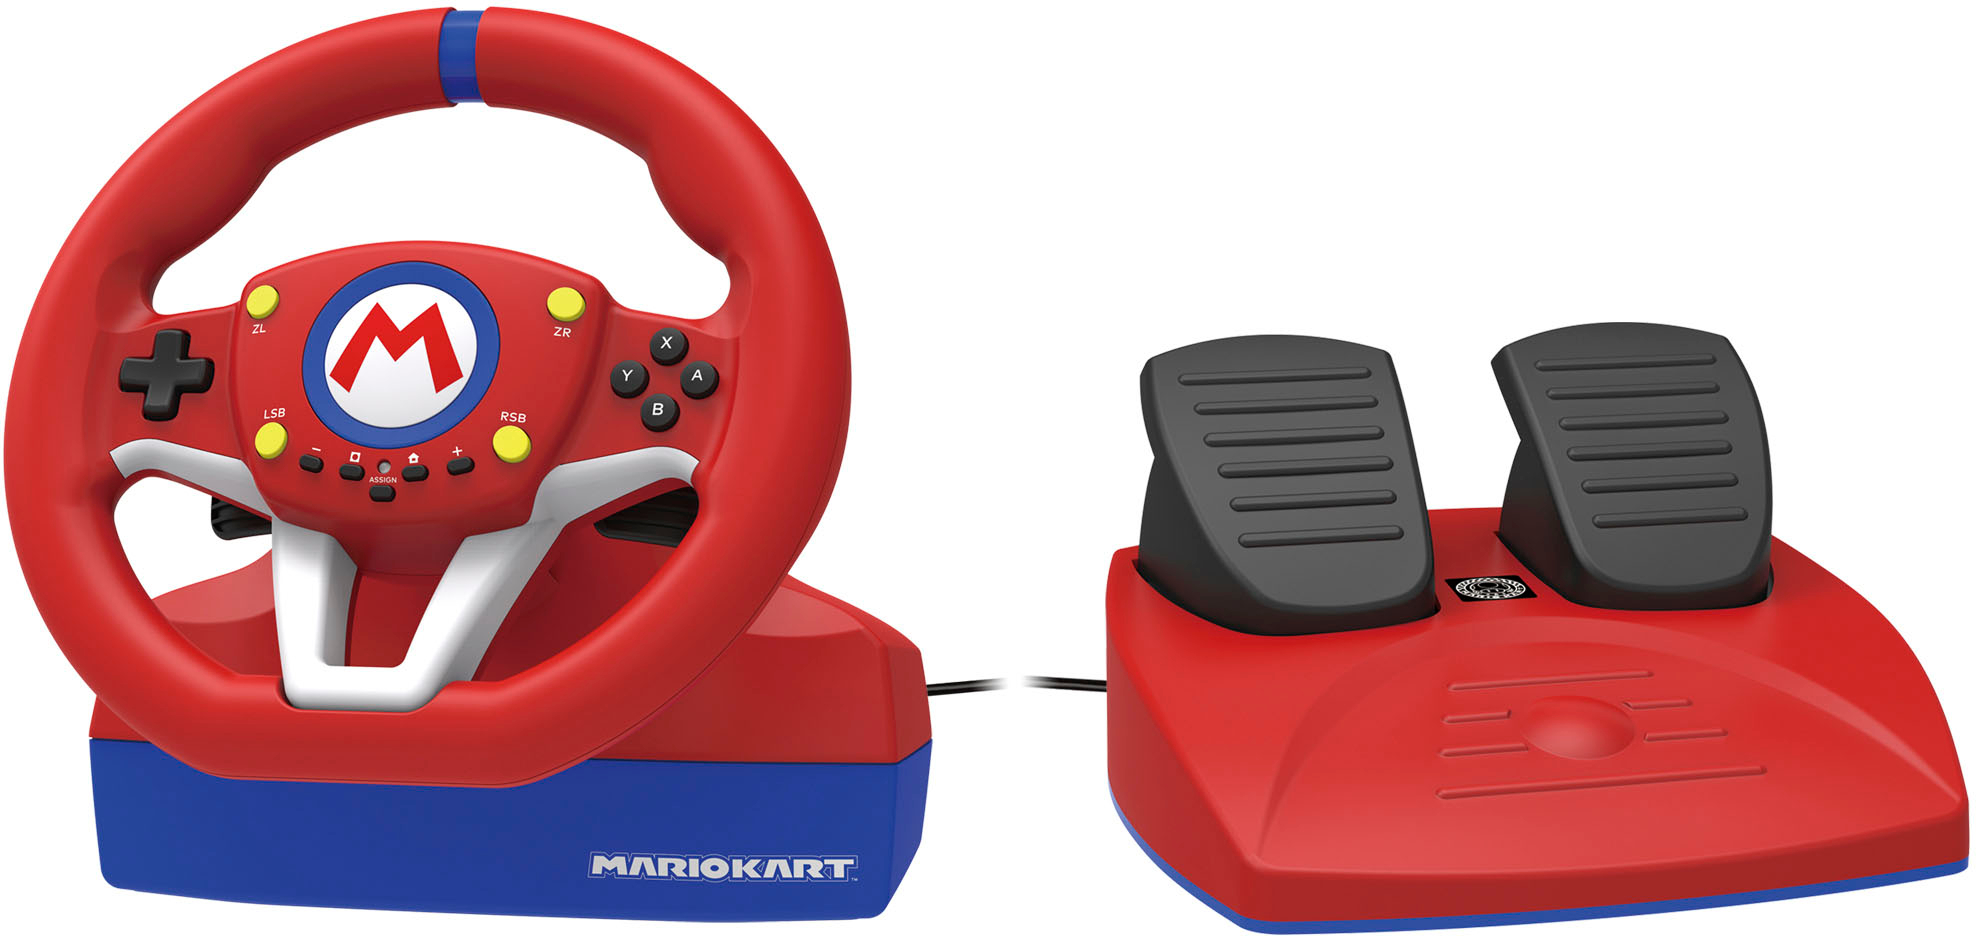 Hori Mario Kart Racing Wheel Pro Mini for Nintendo Switch